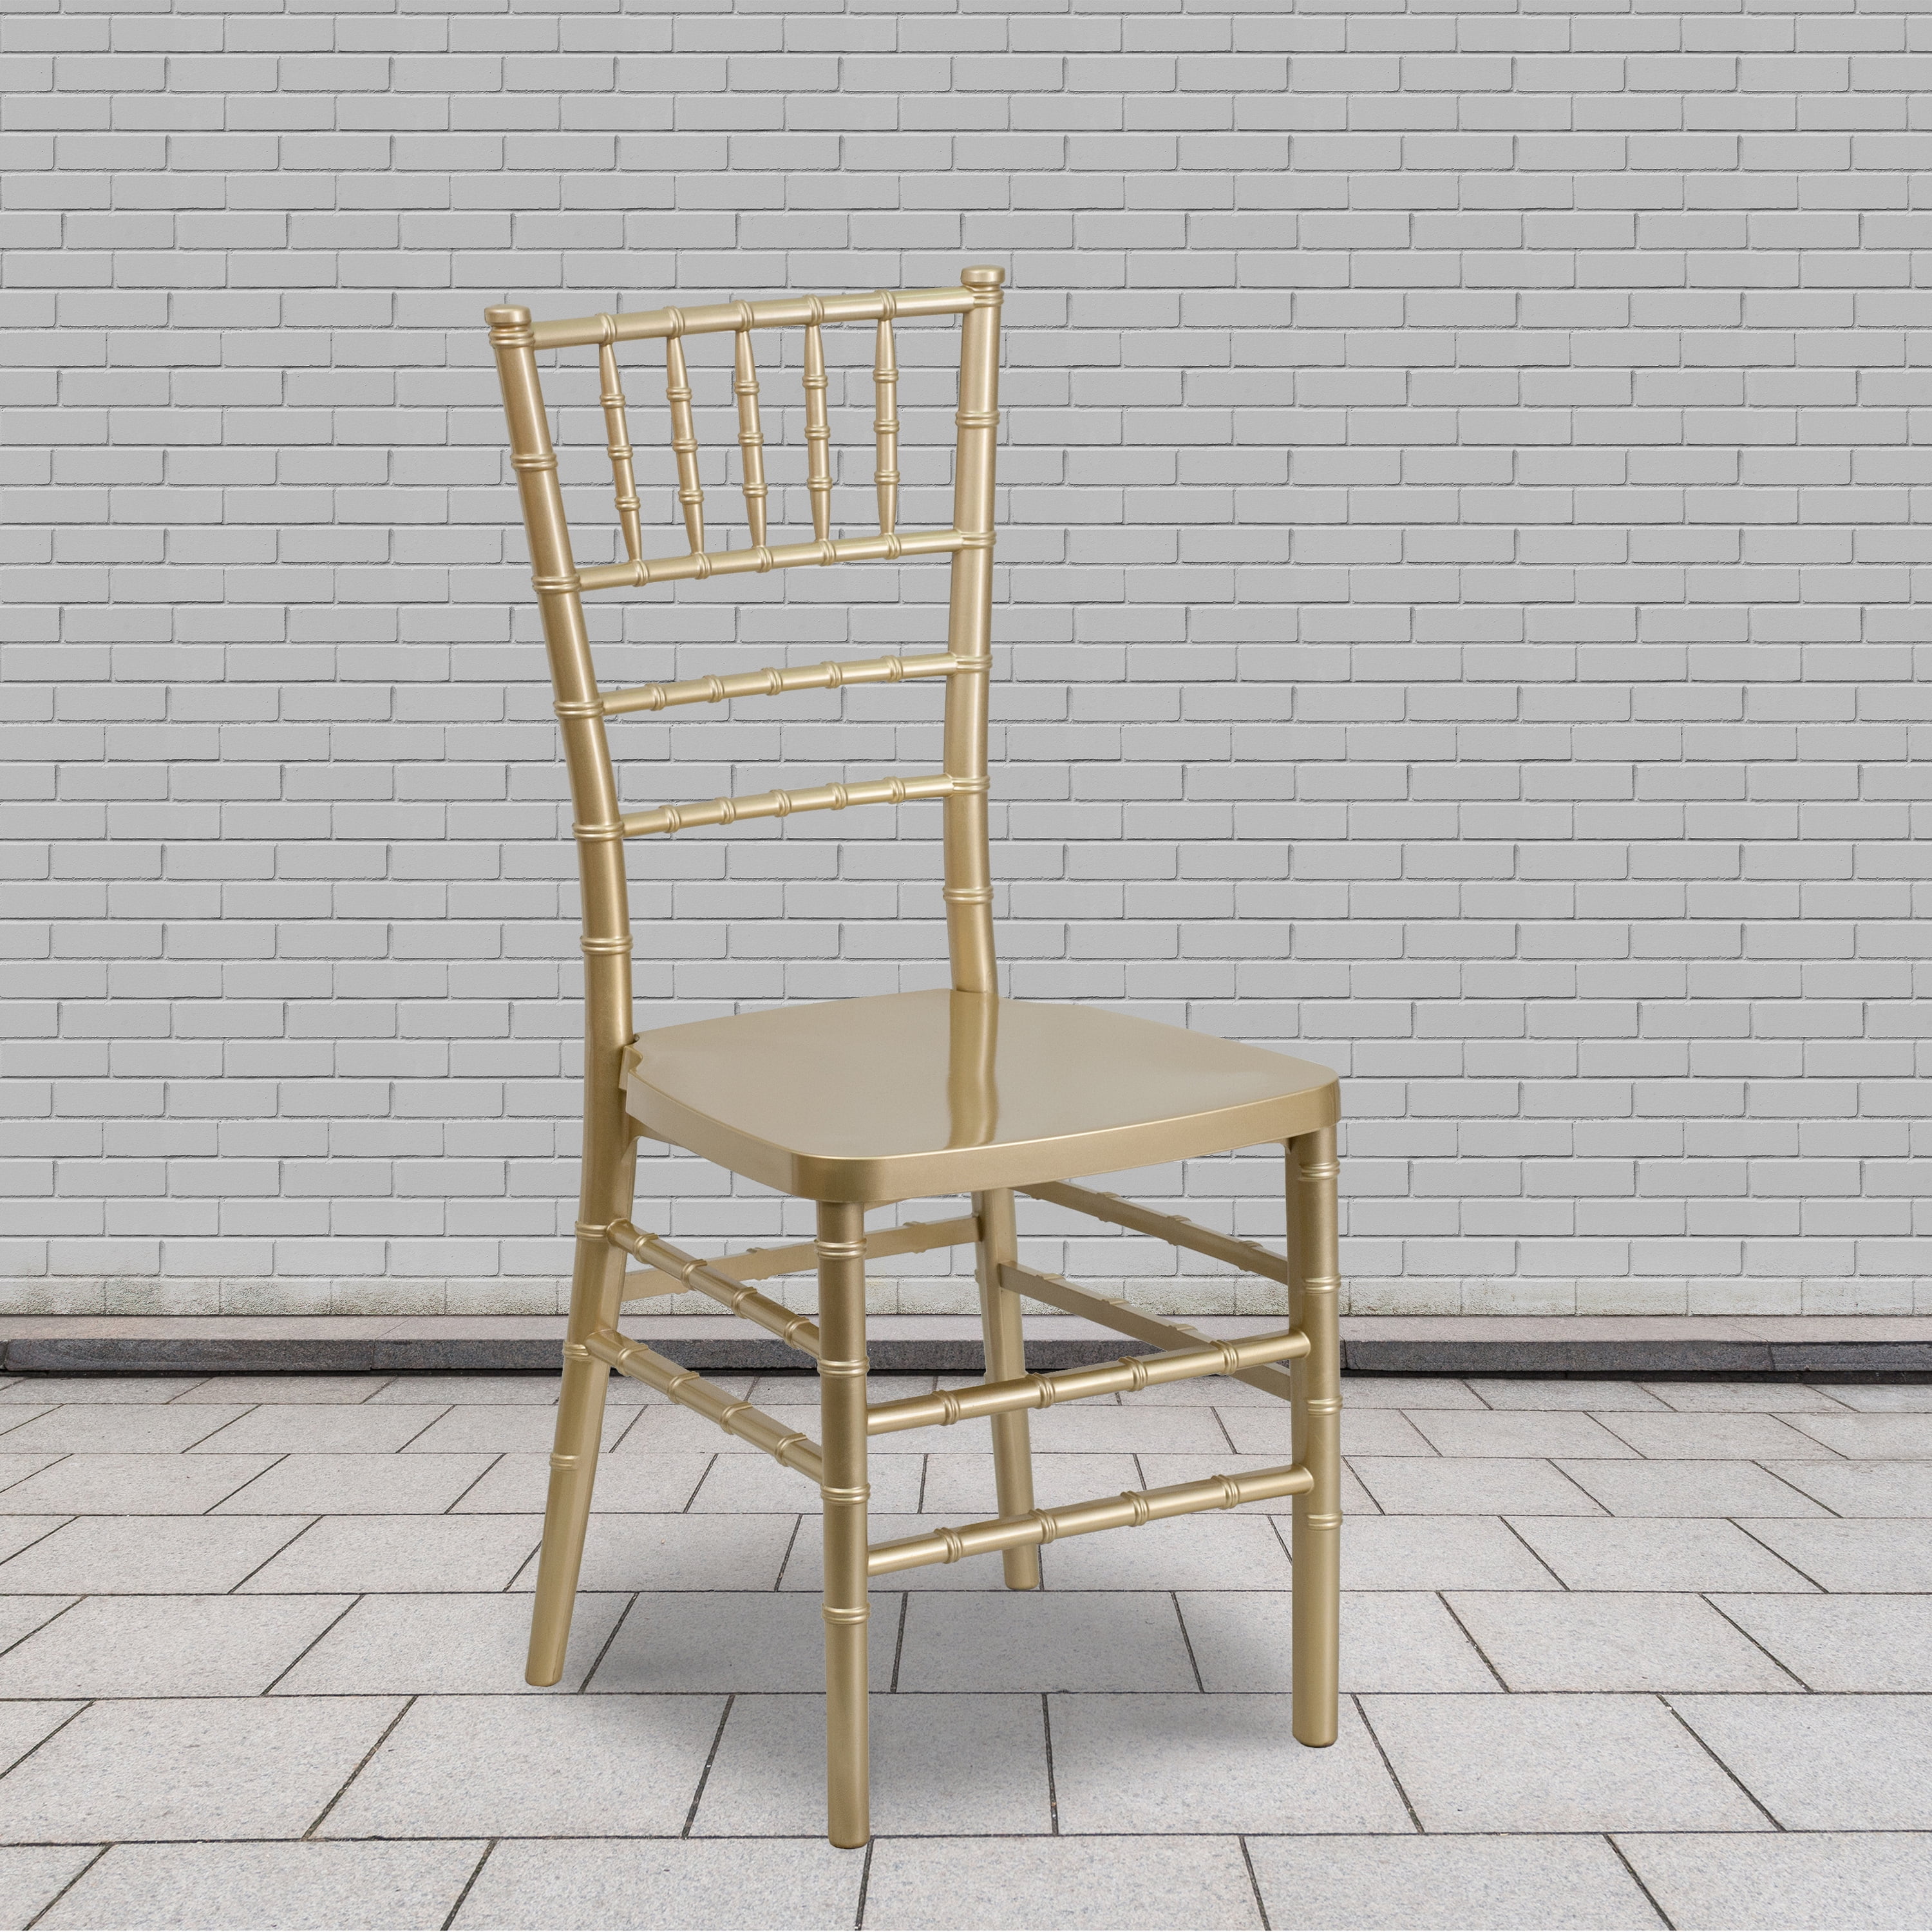 Gold Wood Chiavari Chair with Soft Seat Cushion Wedding Chair 10 PACK 